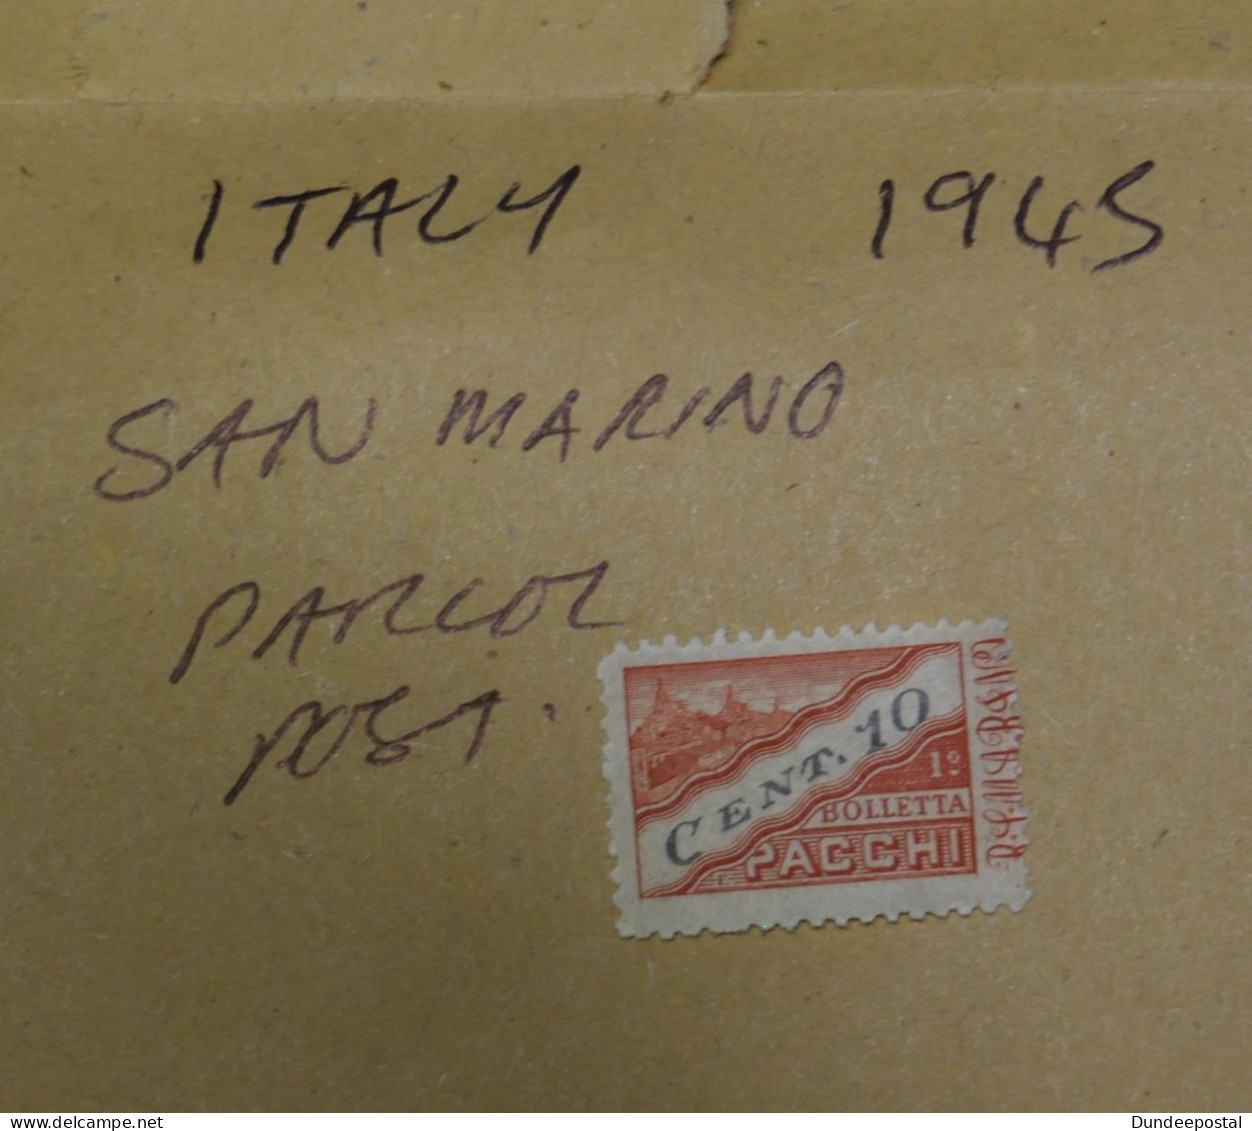 ITALY  STAMPS  San Marino Parcel Post 1945 ~~L@@K~~ - Colis-postaux